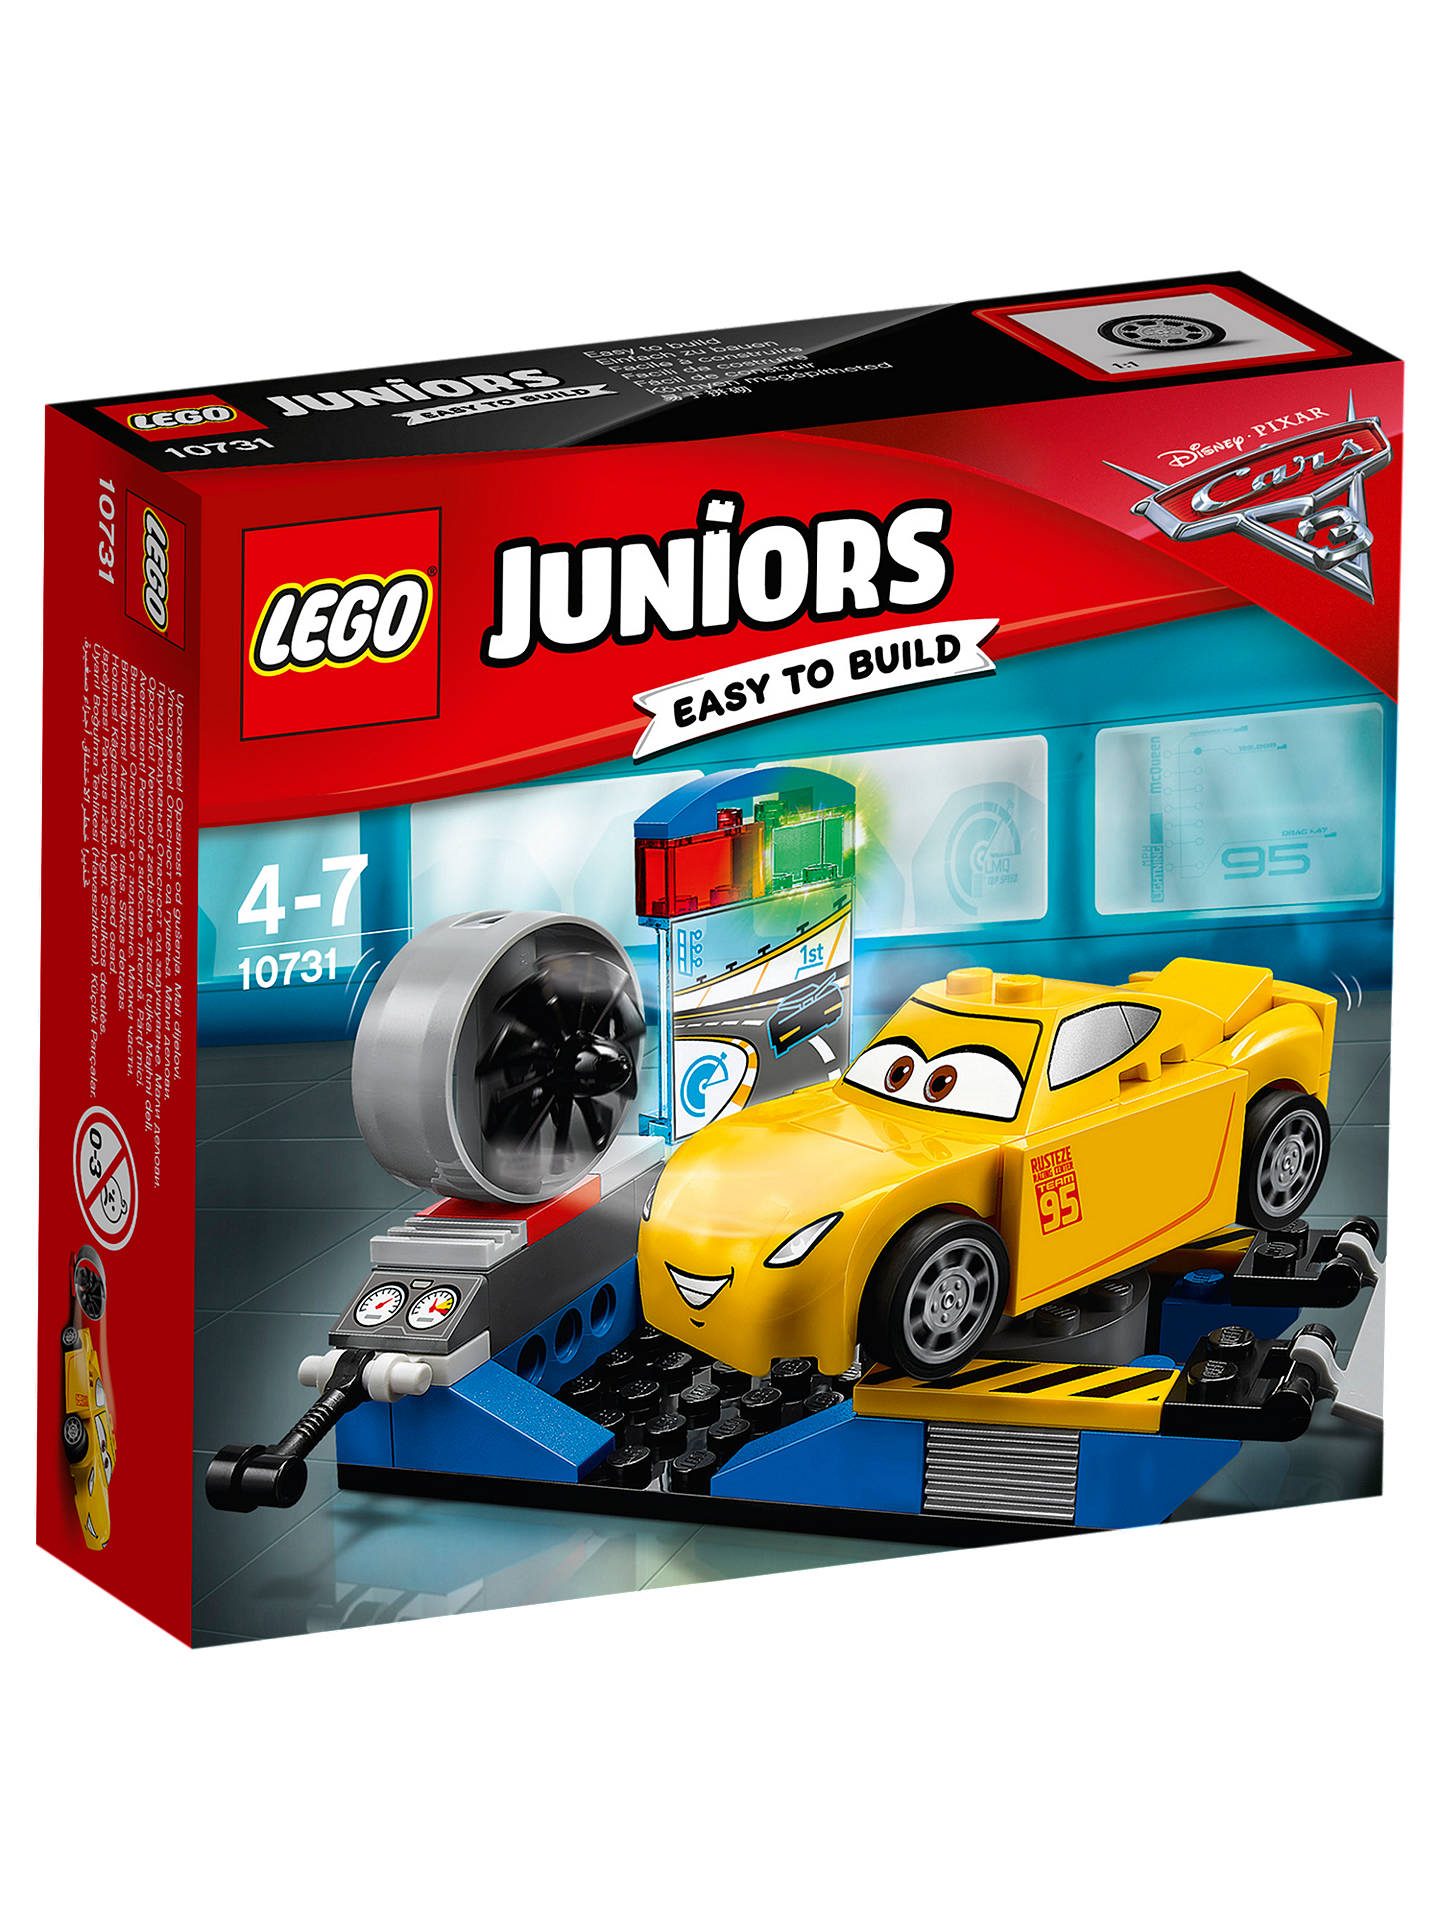 LEGO Juniors 10731 Disney Pixar Cars 3 Cruz Ramirez Race